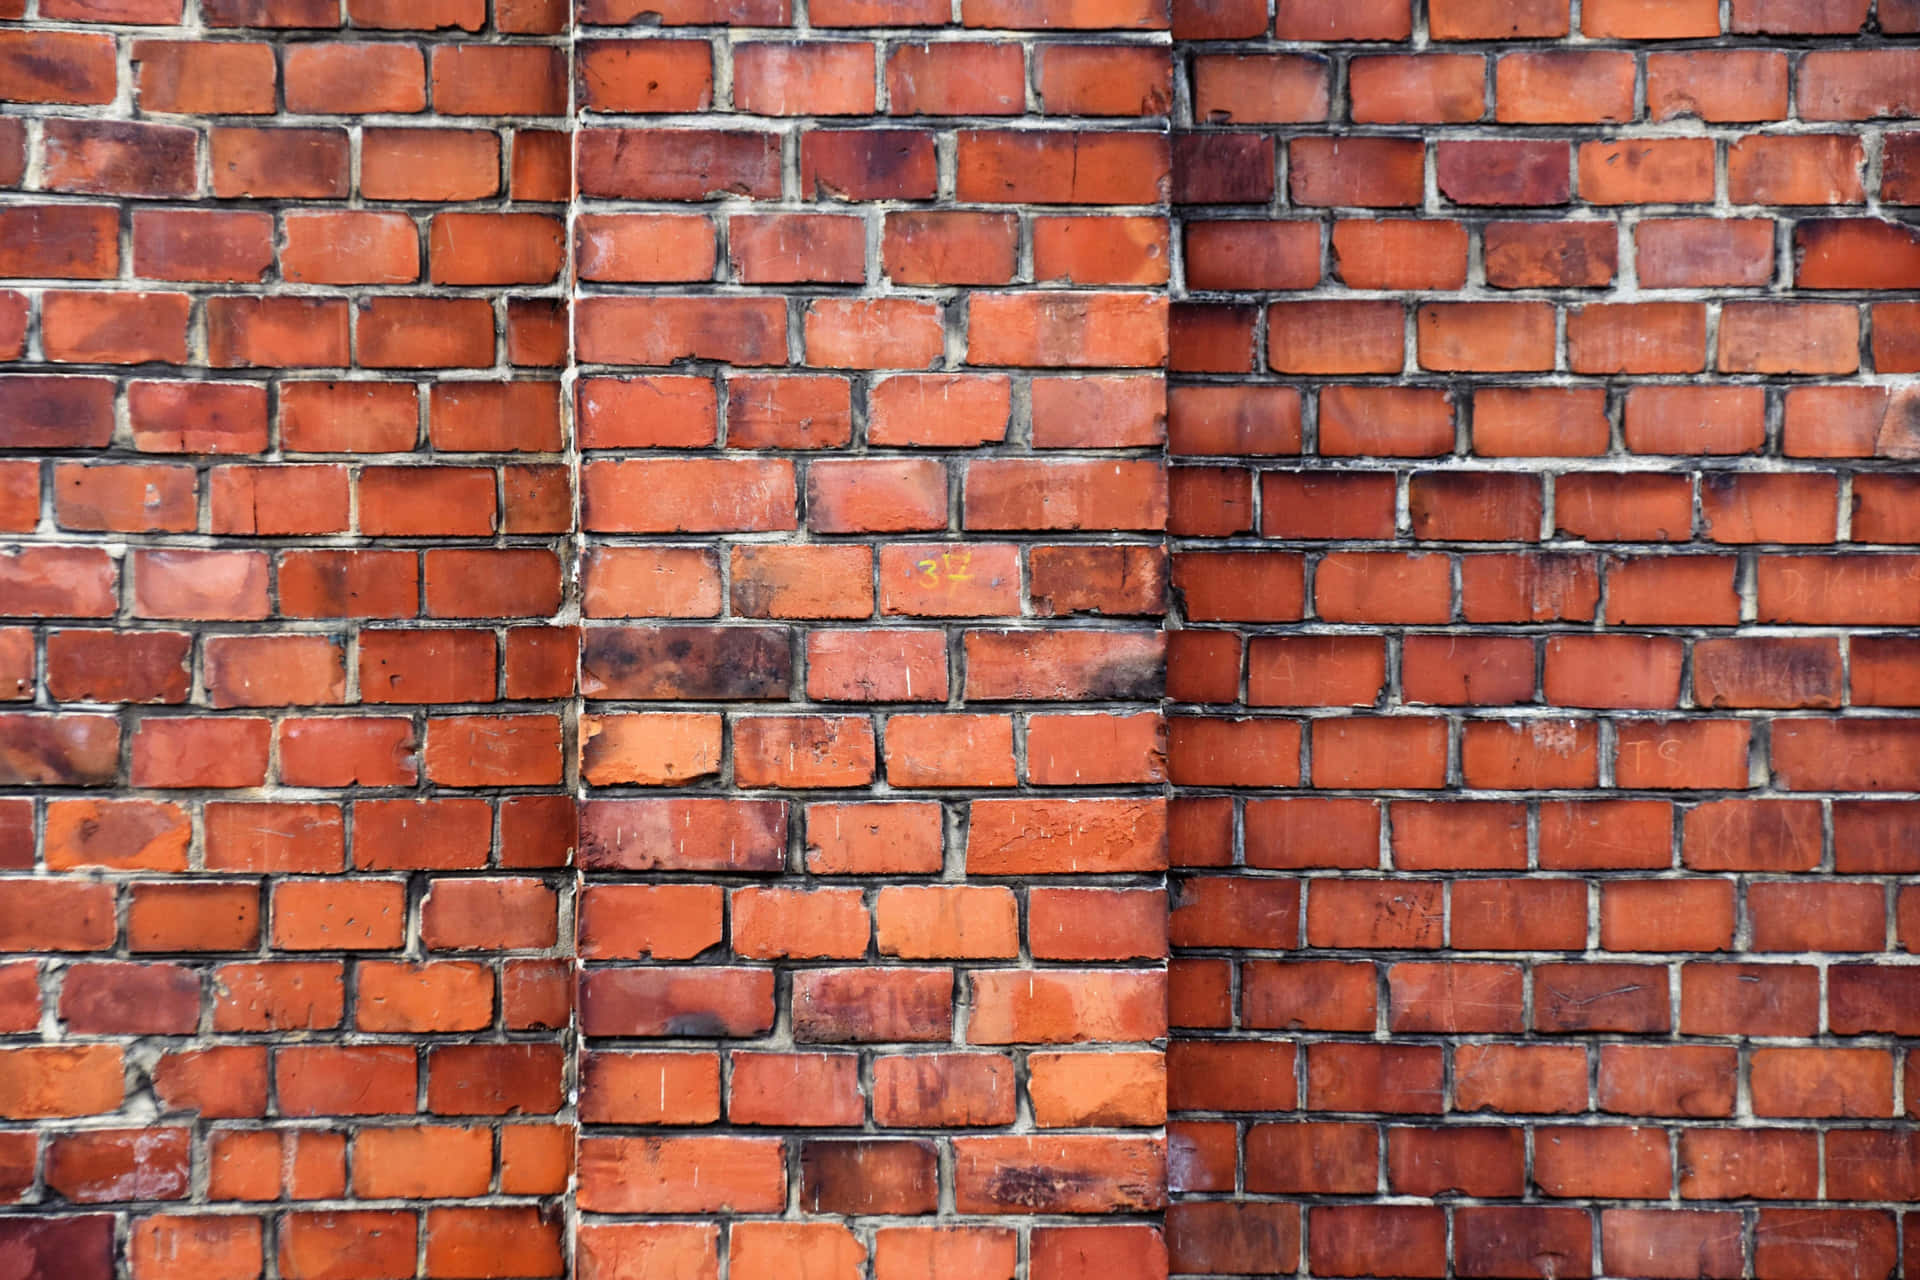 Caption: Authentic Brick Wall Texture